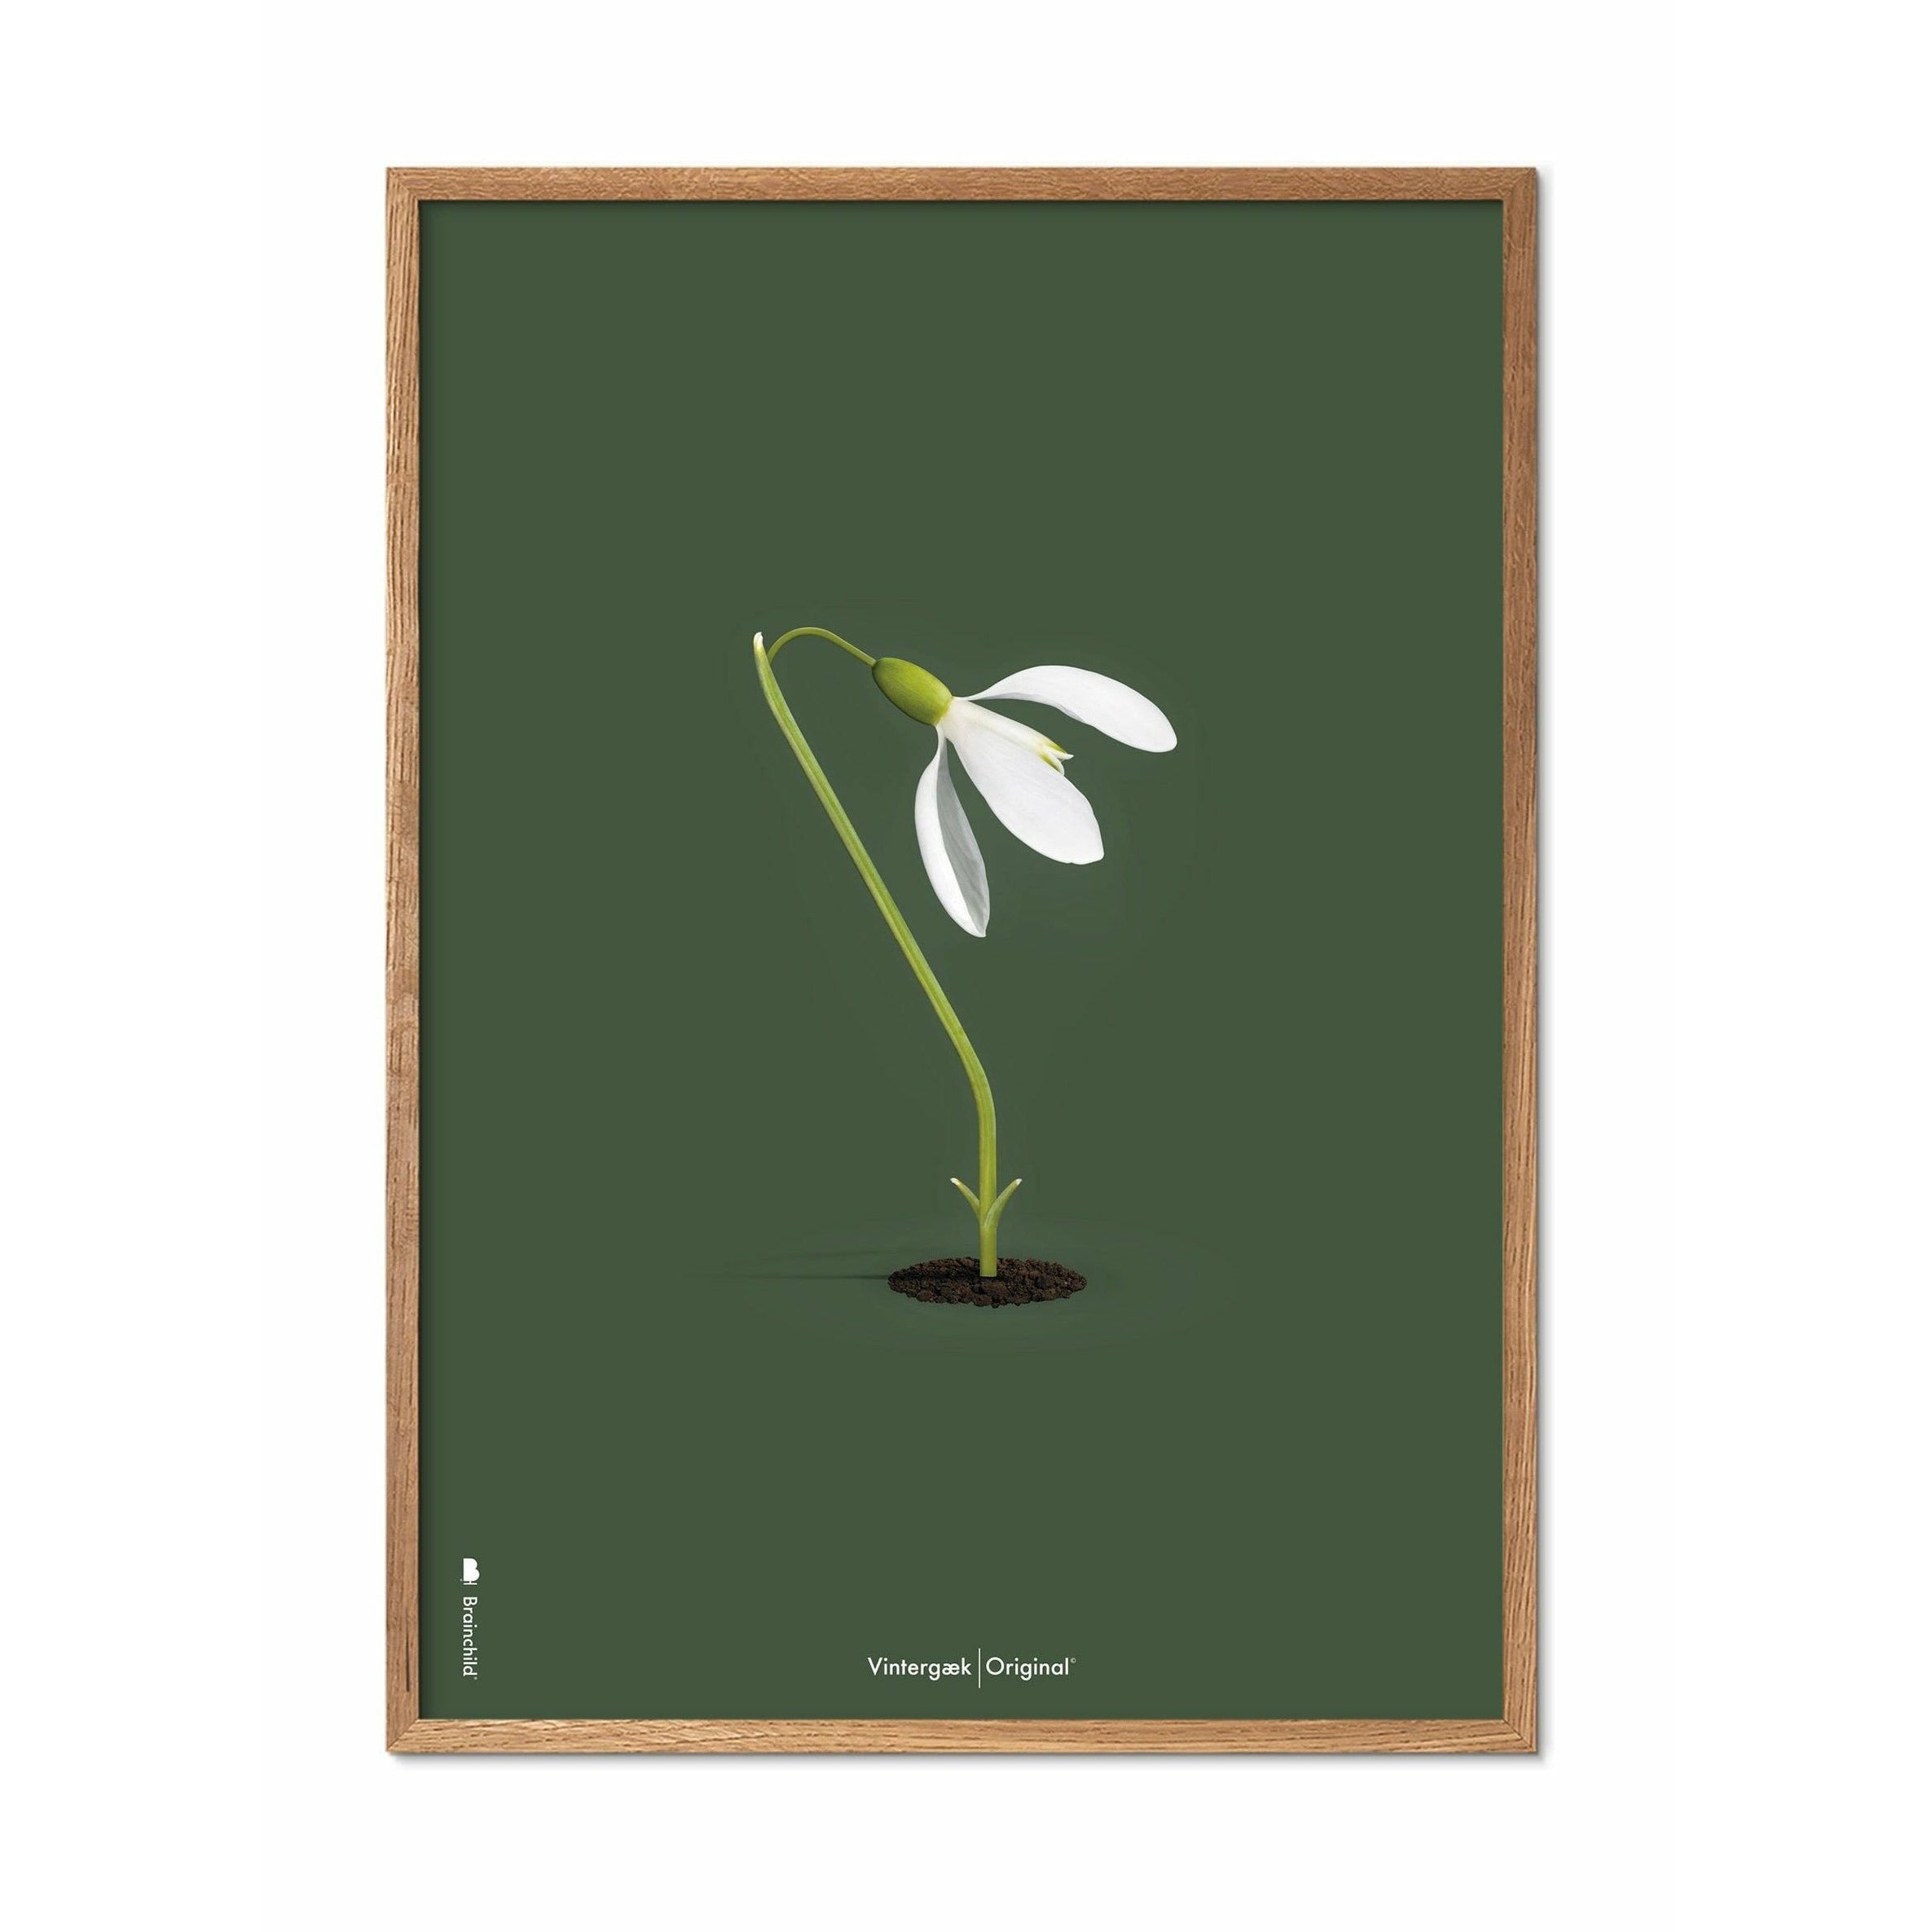 Brainchild Vinter bra klassisk affisch, ram i lätt trä 30x40 cm, grön bakgrund